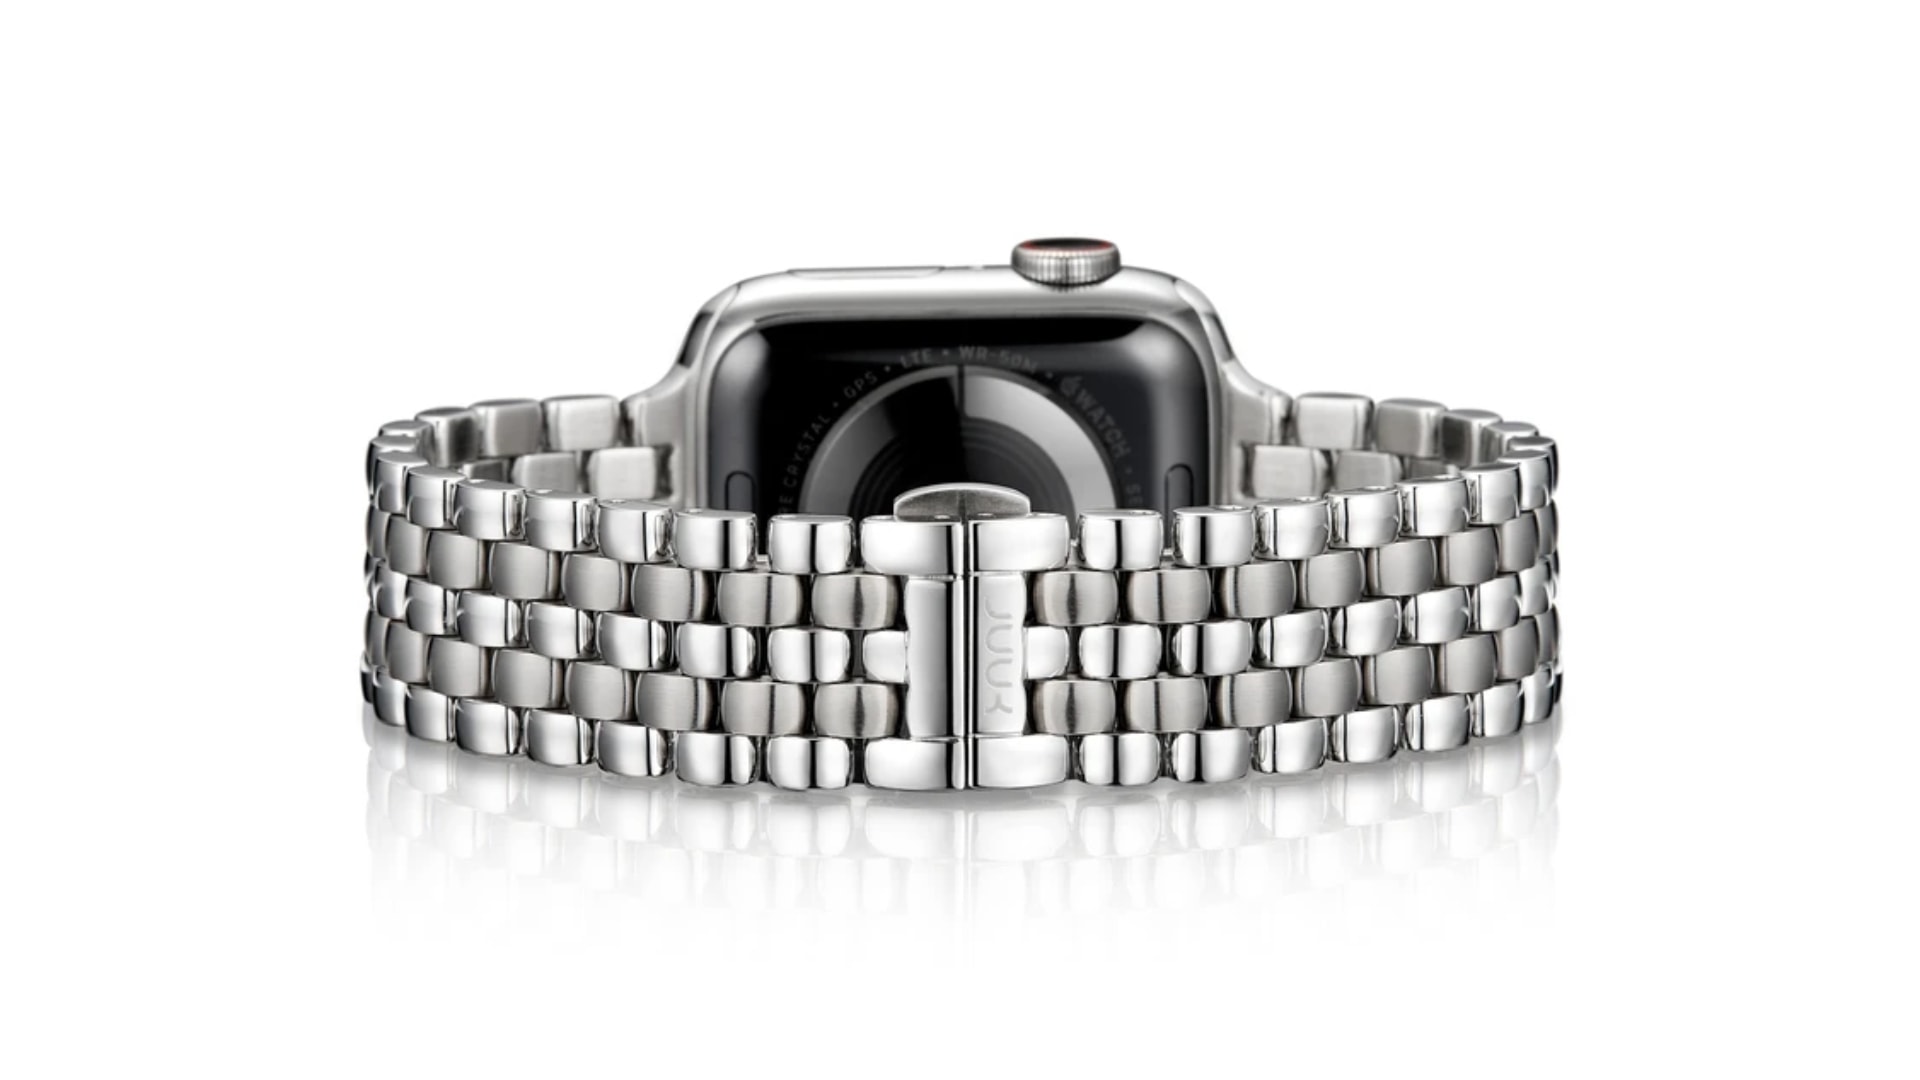 Juuk Aruna for Apple Watch in silver